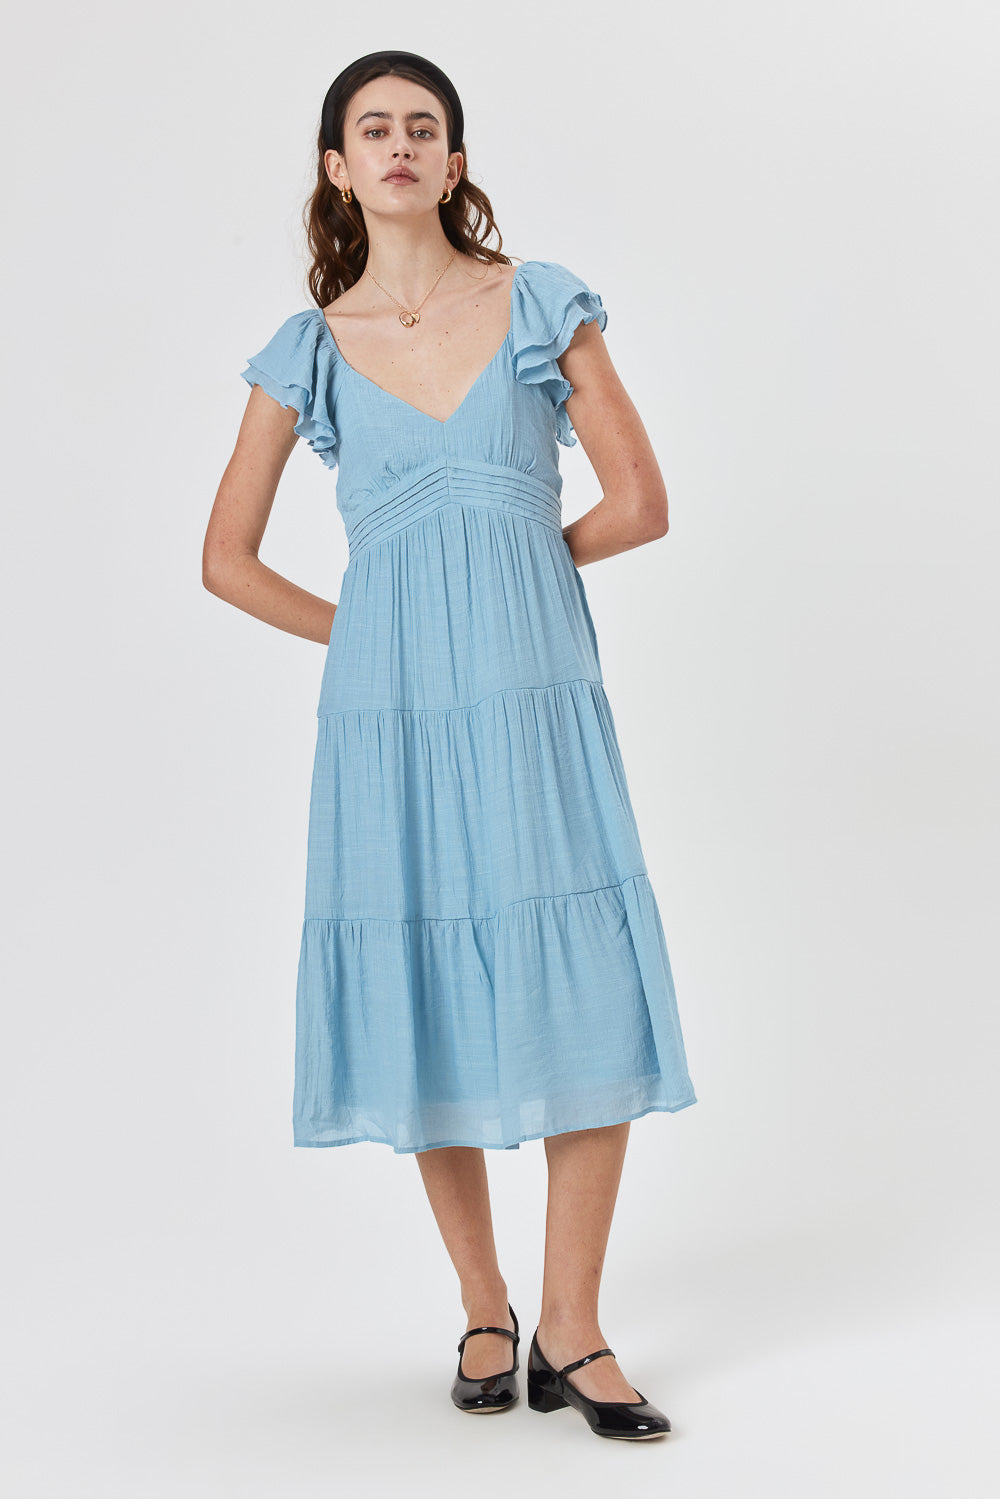 Polka Dot Long Sleeve Dress - Trixxi Clothing